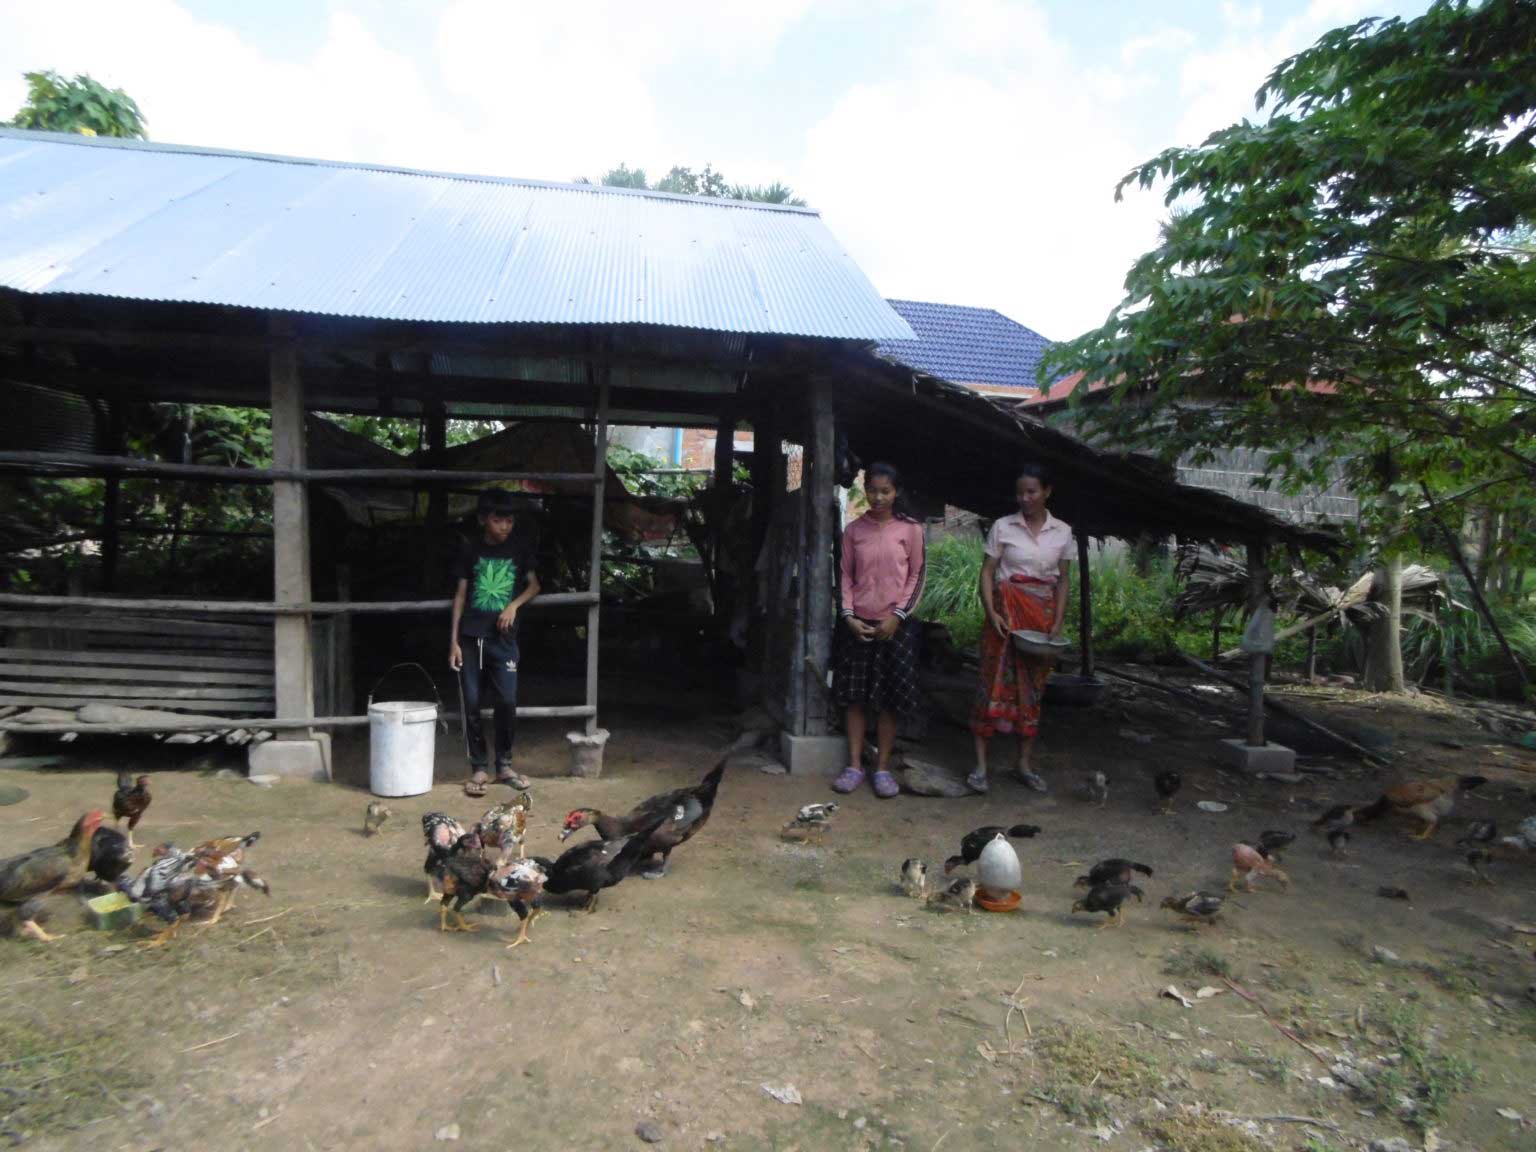 Children feeding chickens in Cambodia